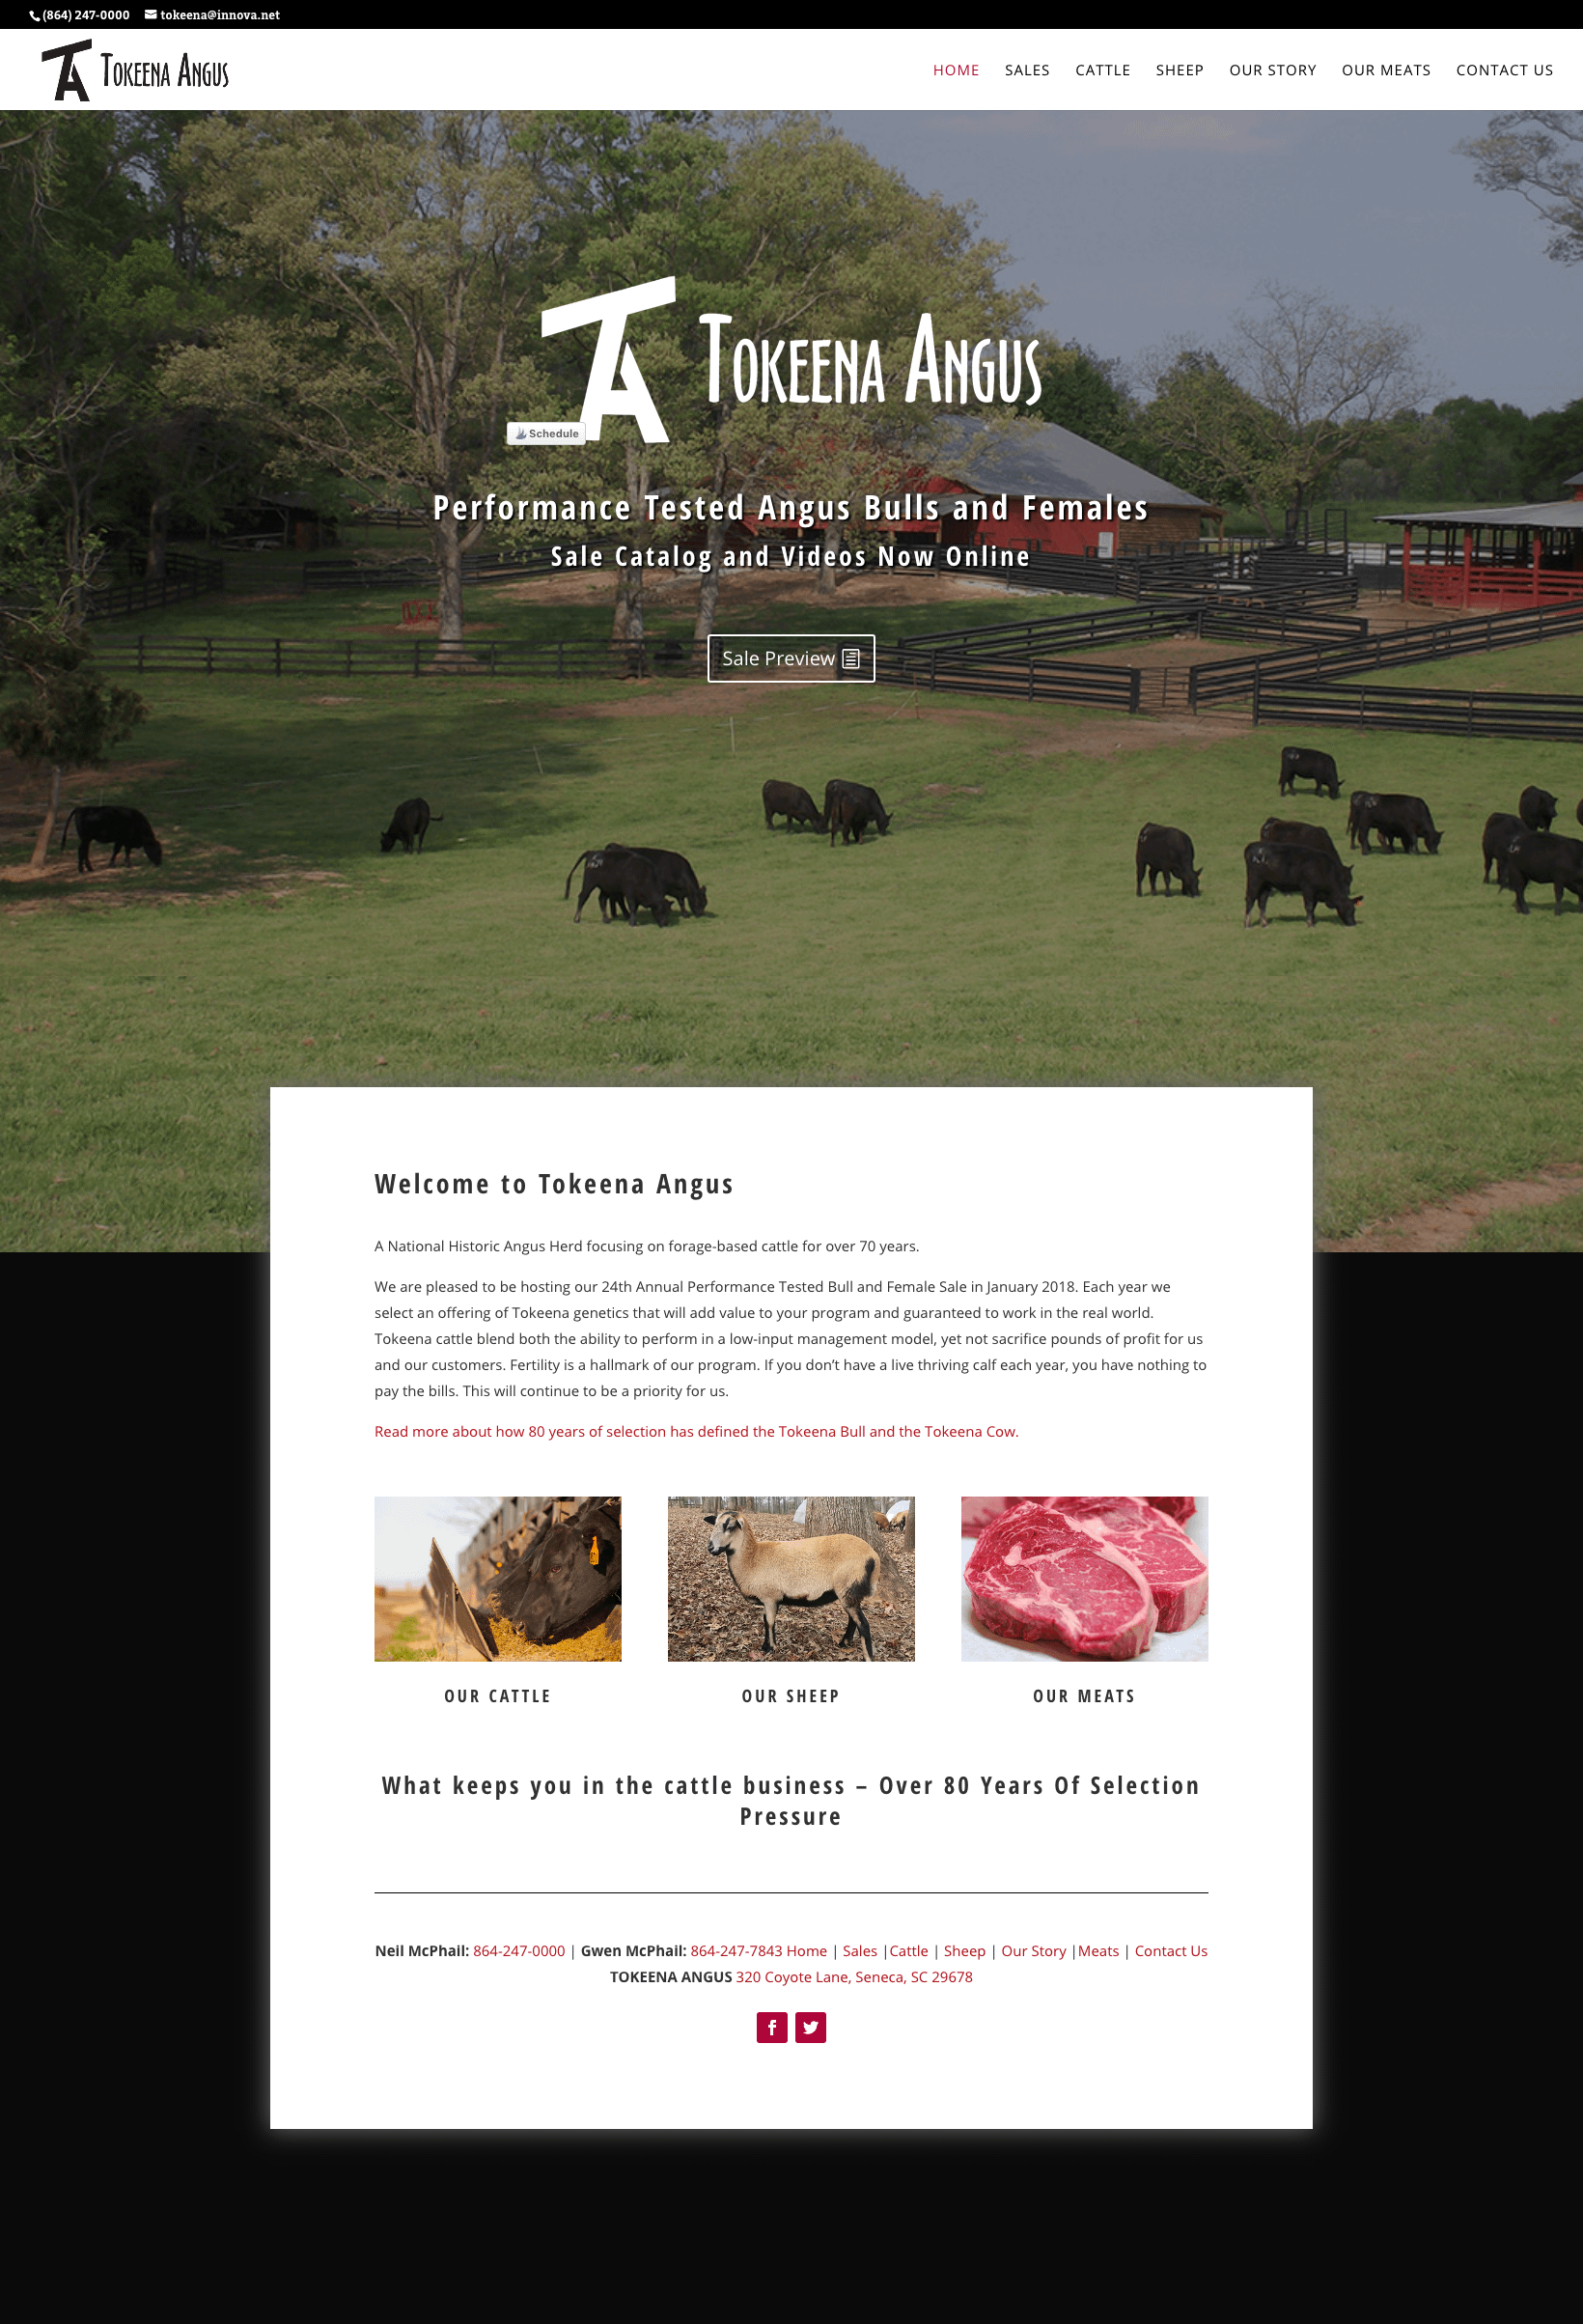 tokeena angus website layout